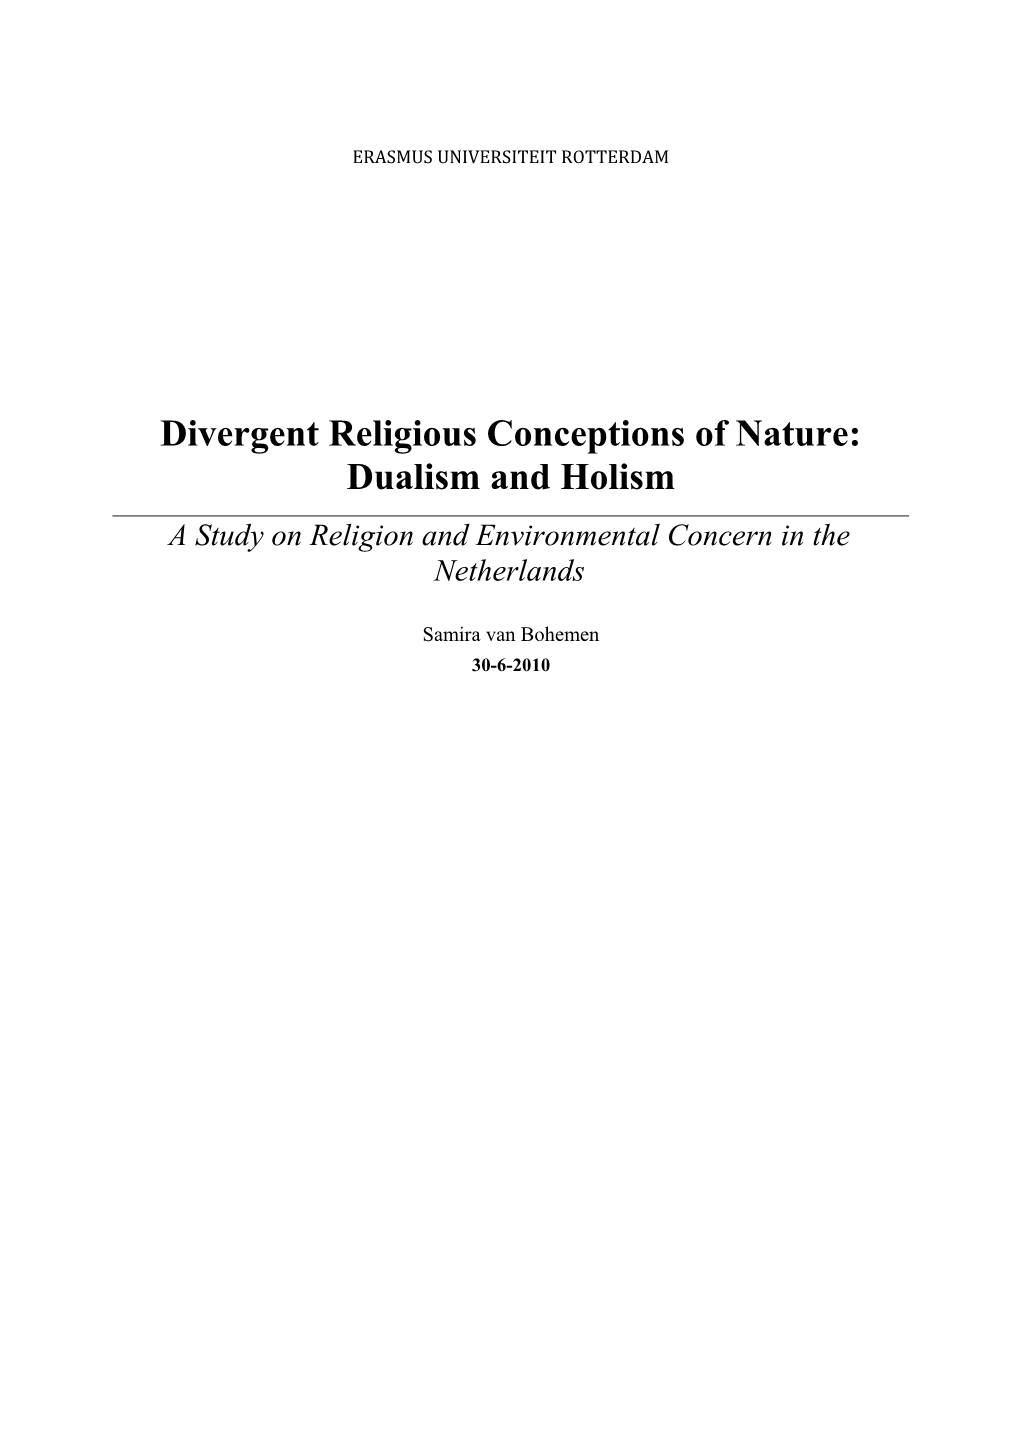 Divergent Religious Conceptions of Nature: Dualism Versus Holism